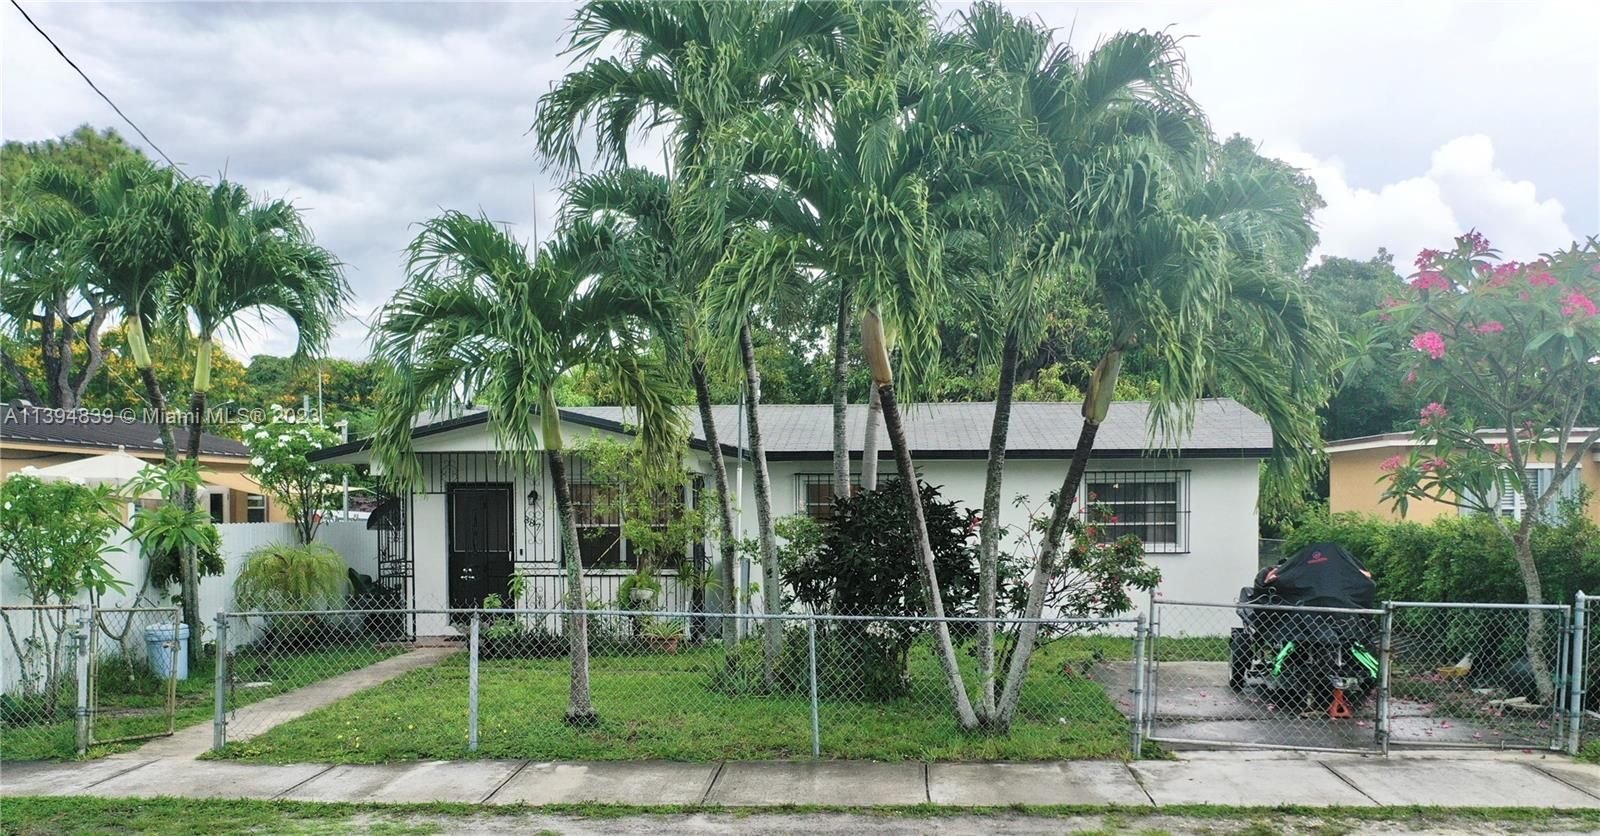 Real estate property located at 887 113th St, Miami-Dade County, Miami, FL